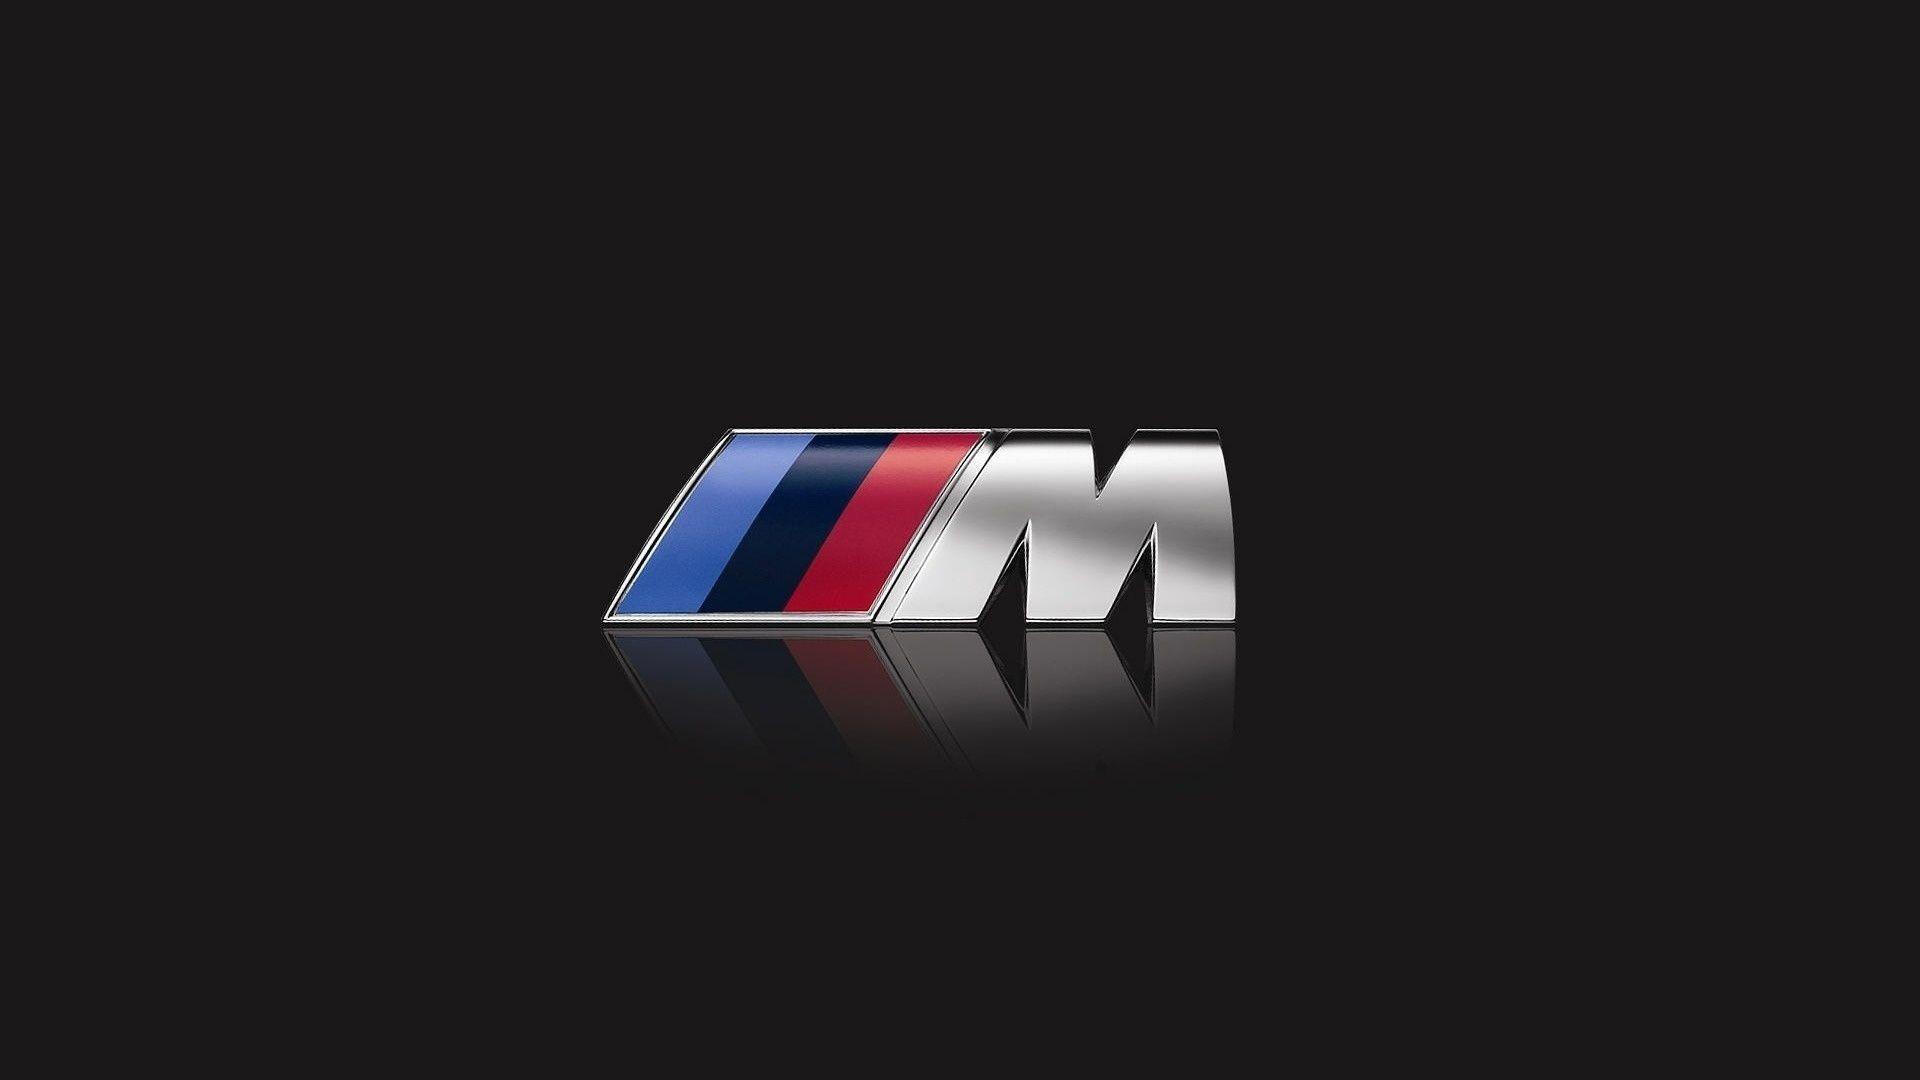 BMW M Logo Desktop Wallpaper. All About Gallery Car